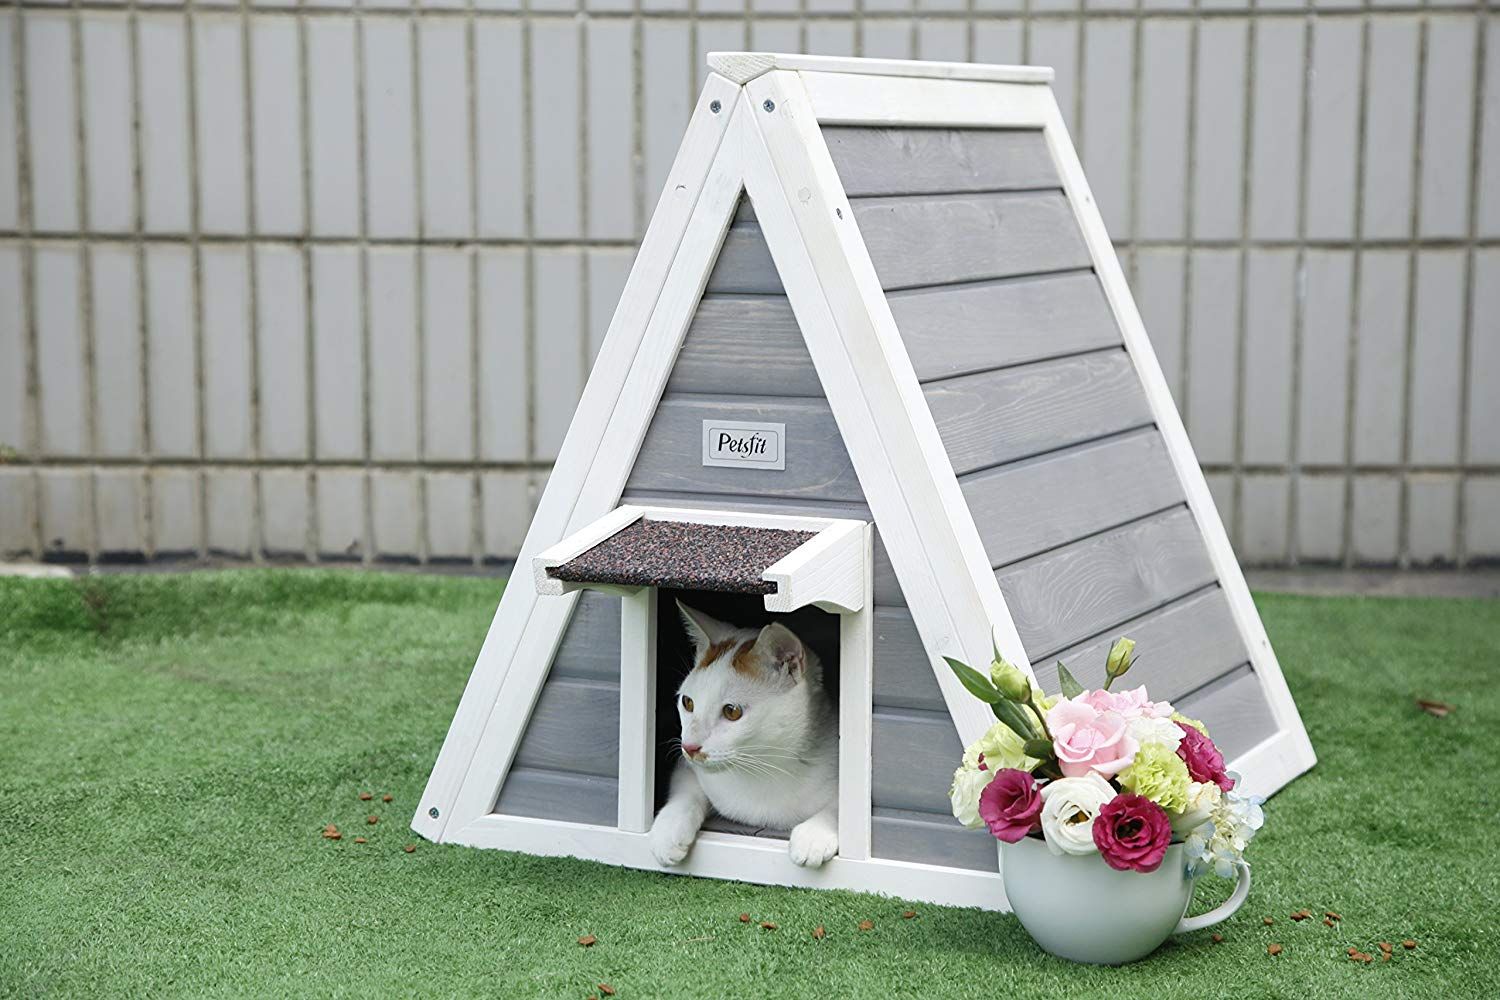 Lovupet Wooden Weatherproof Outdoor/Indoor Cat Kitty Shelter Condo House with Balcony 0507 